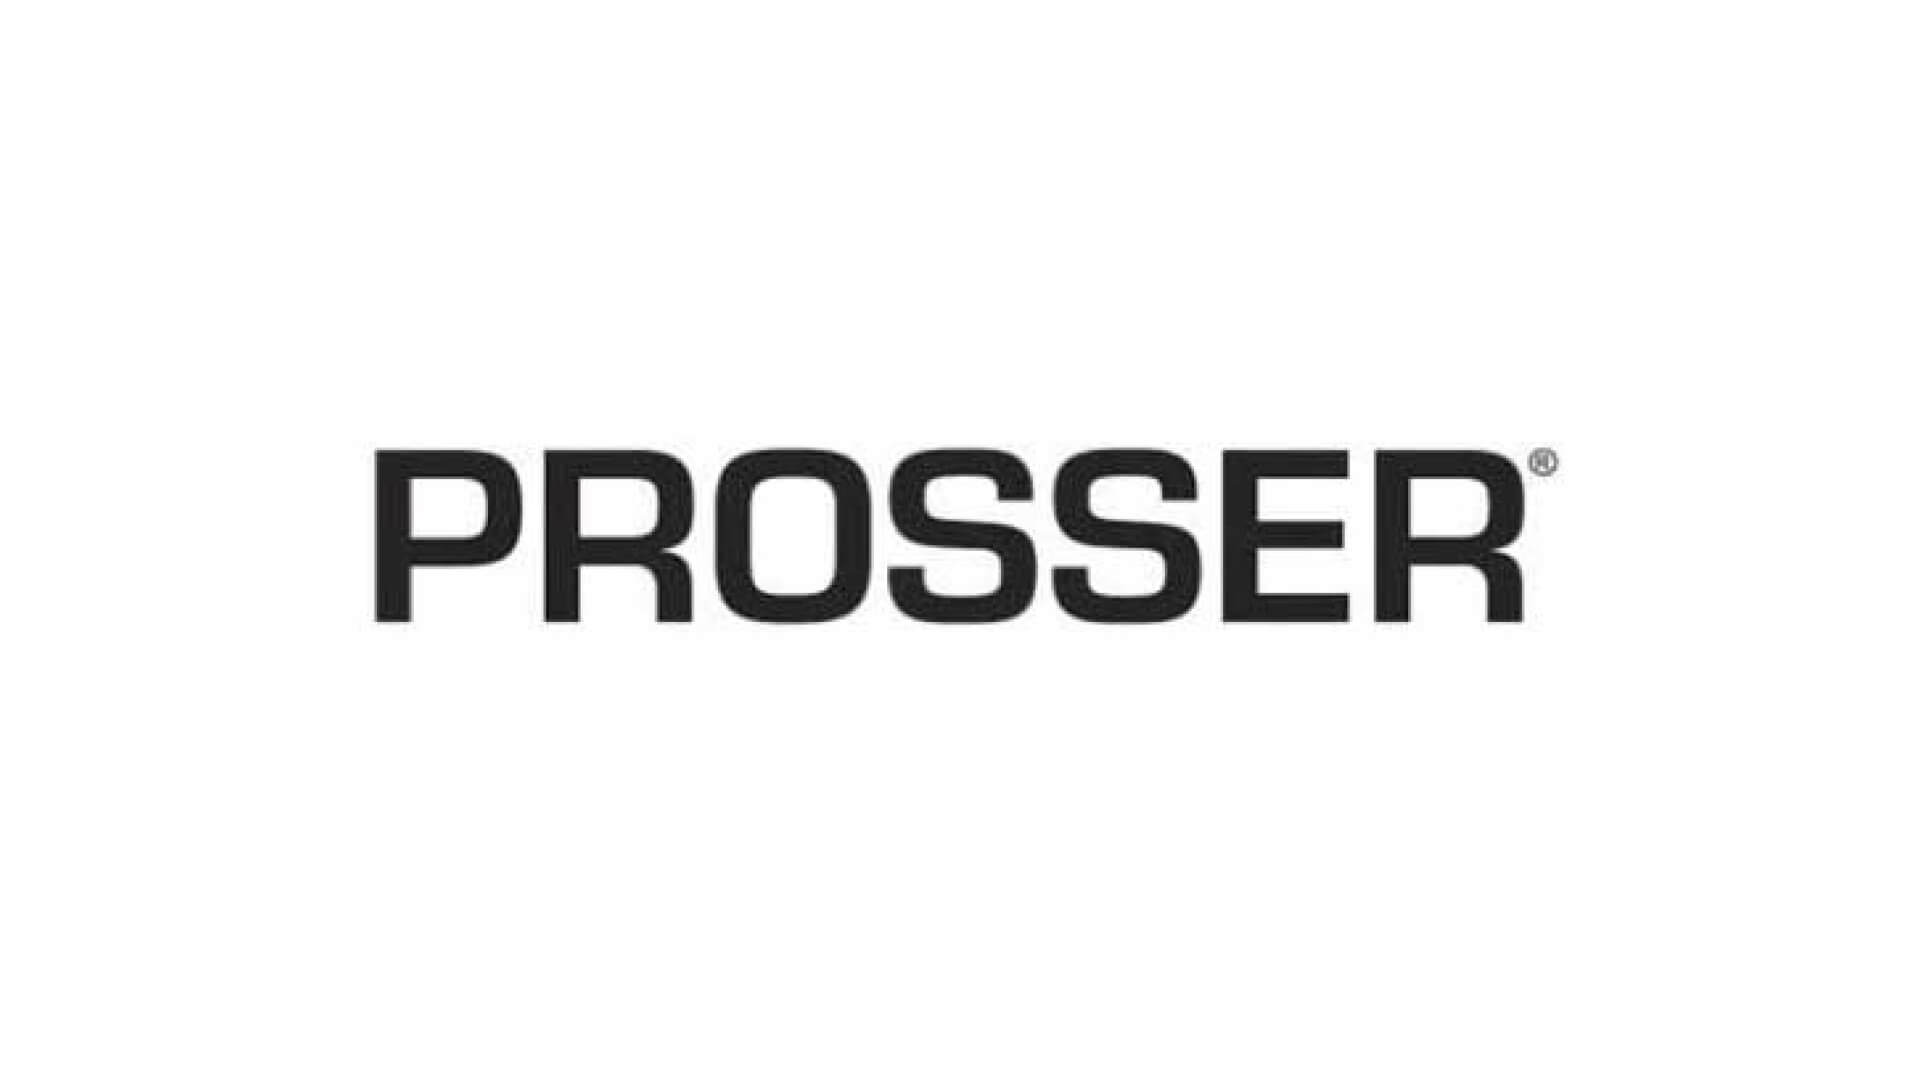 Prosser Pumps logo in black